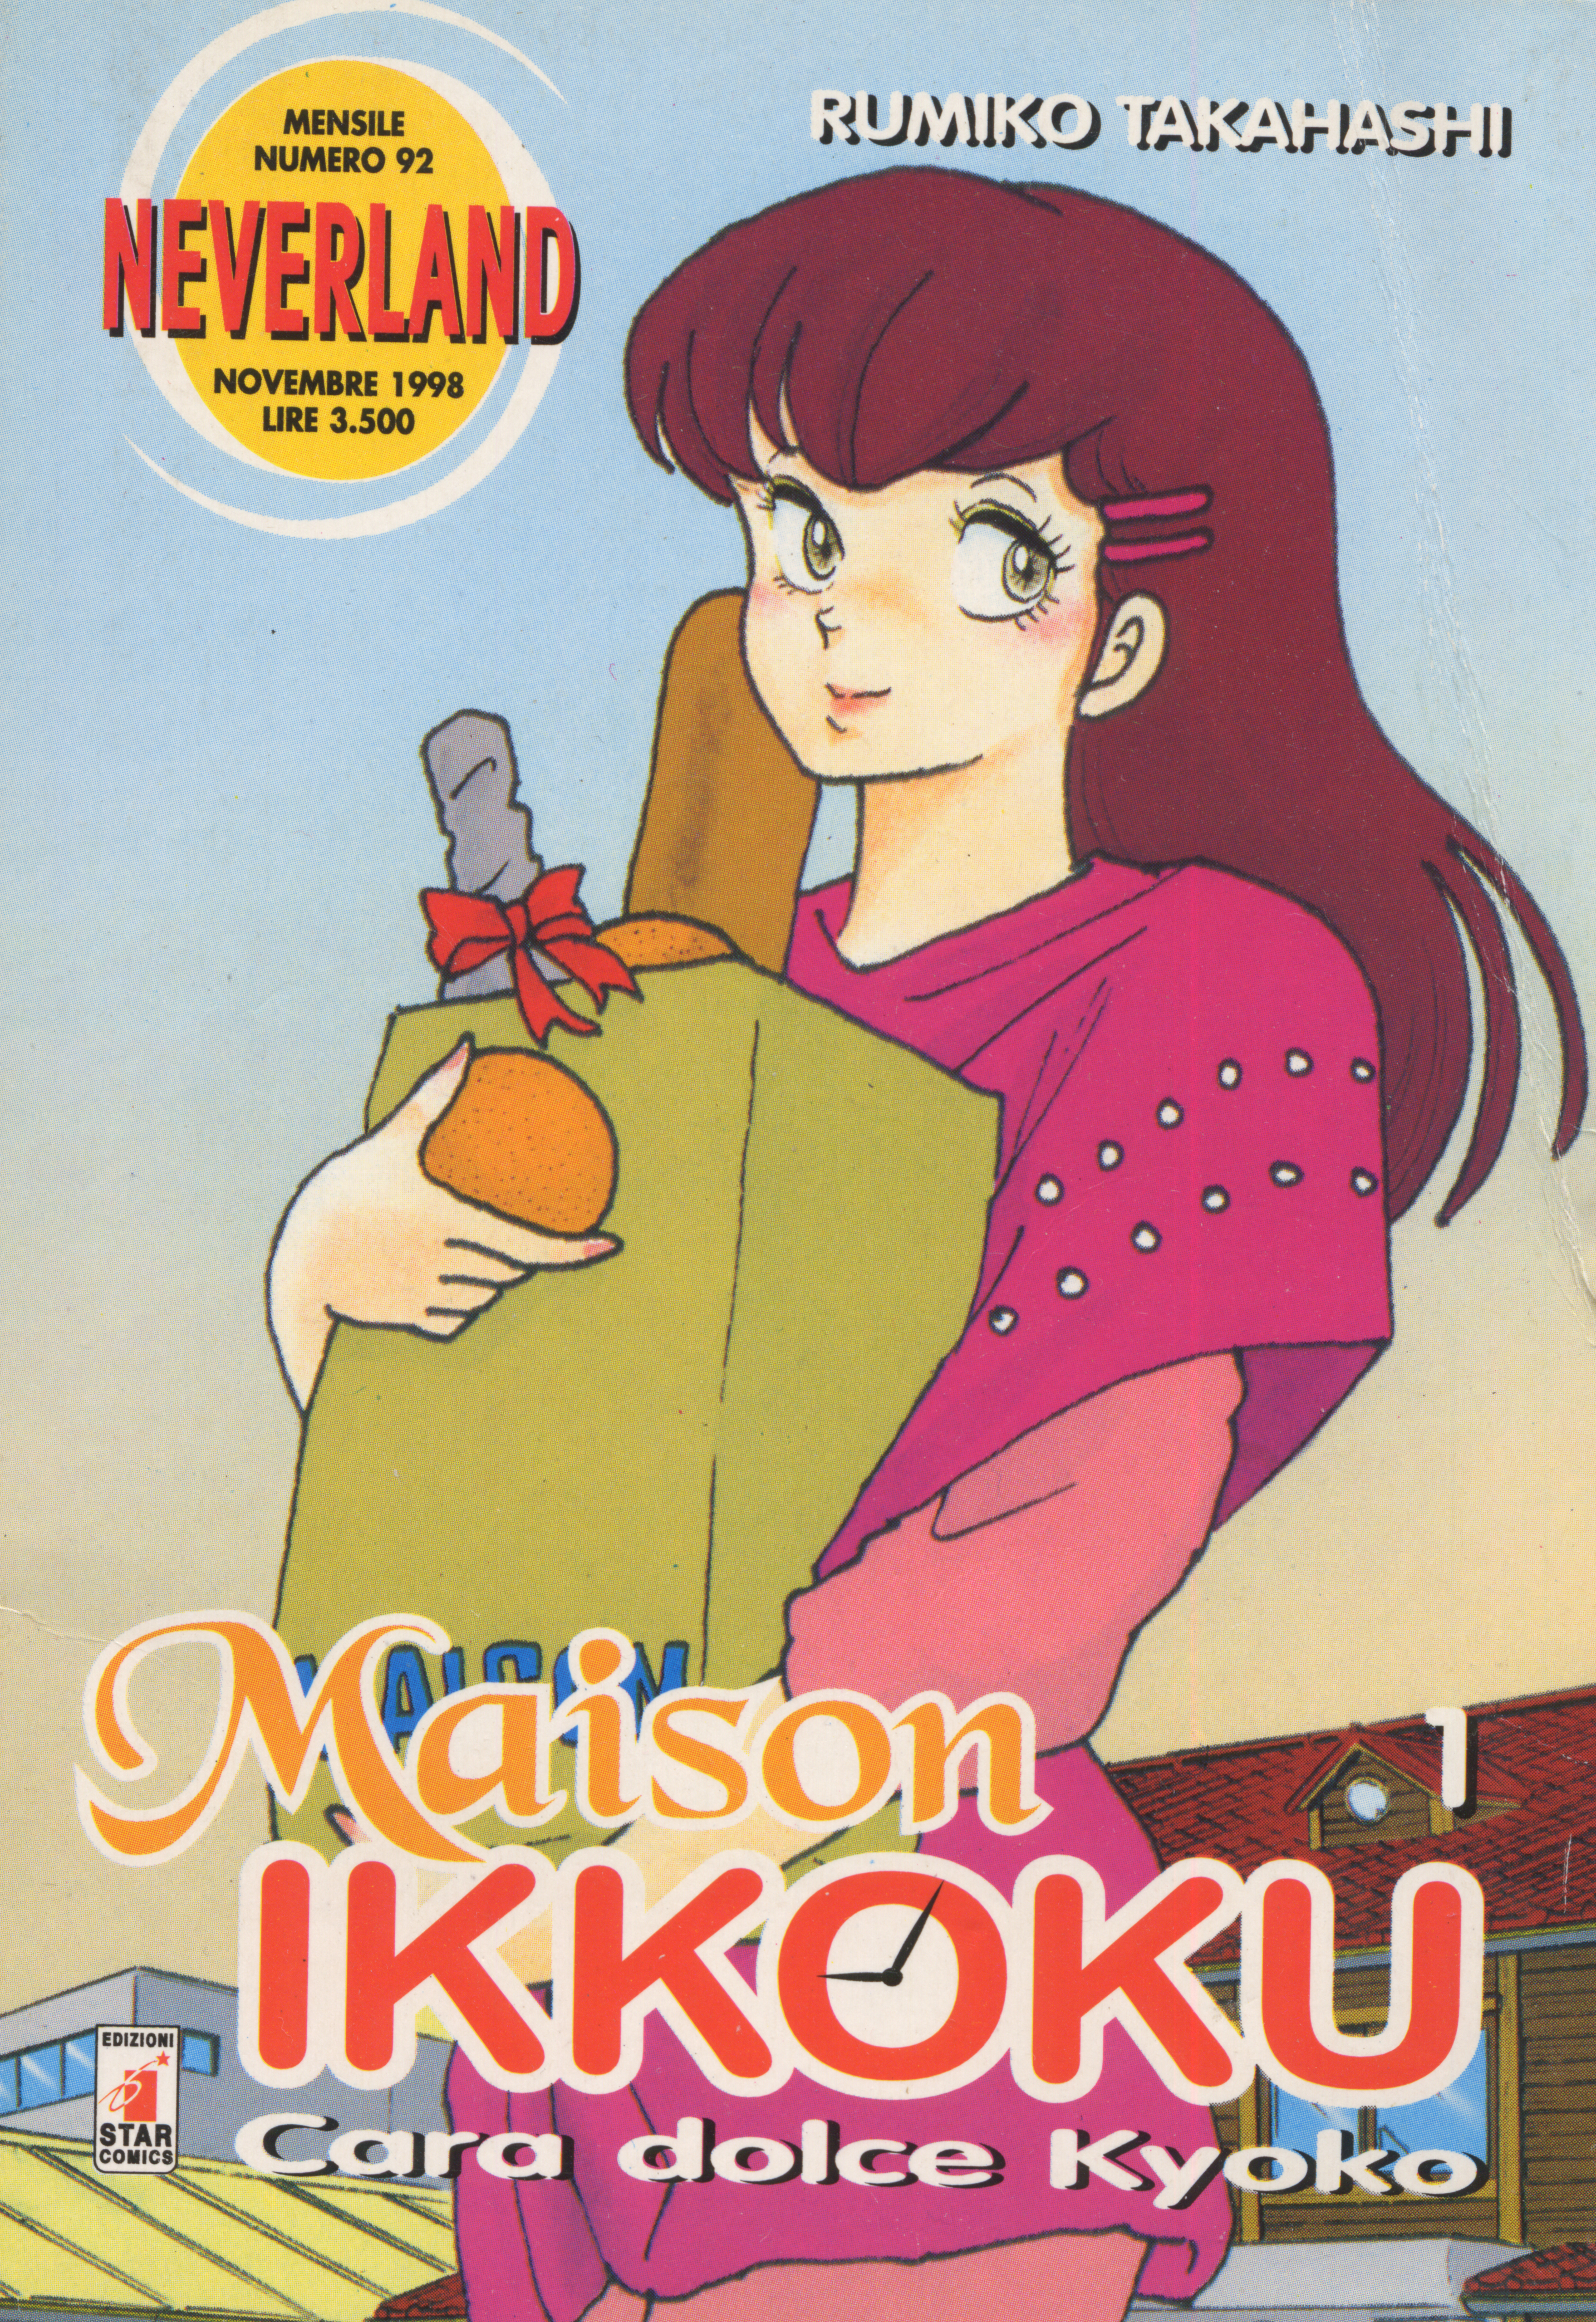 Maison Ikkoku - Cara dolce Kyoko cover